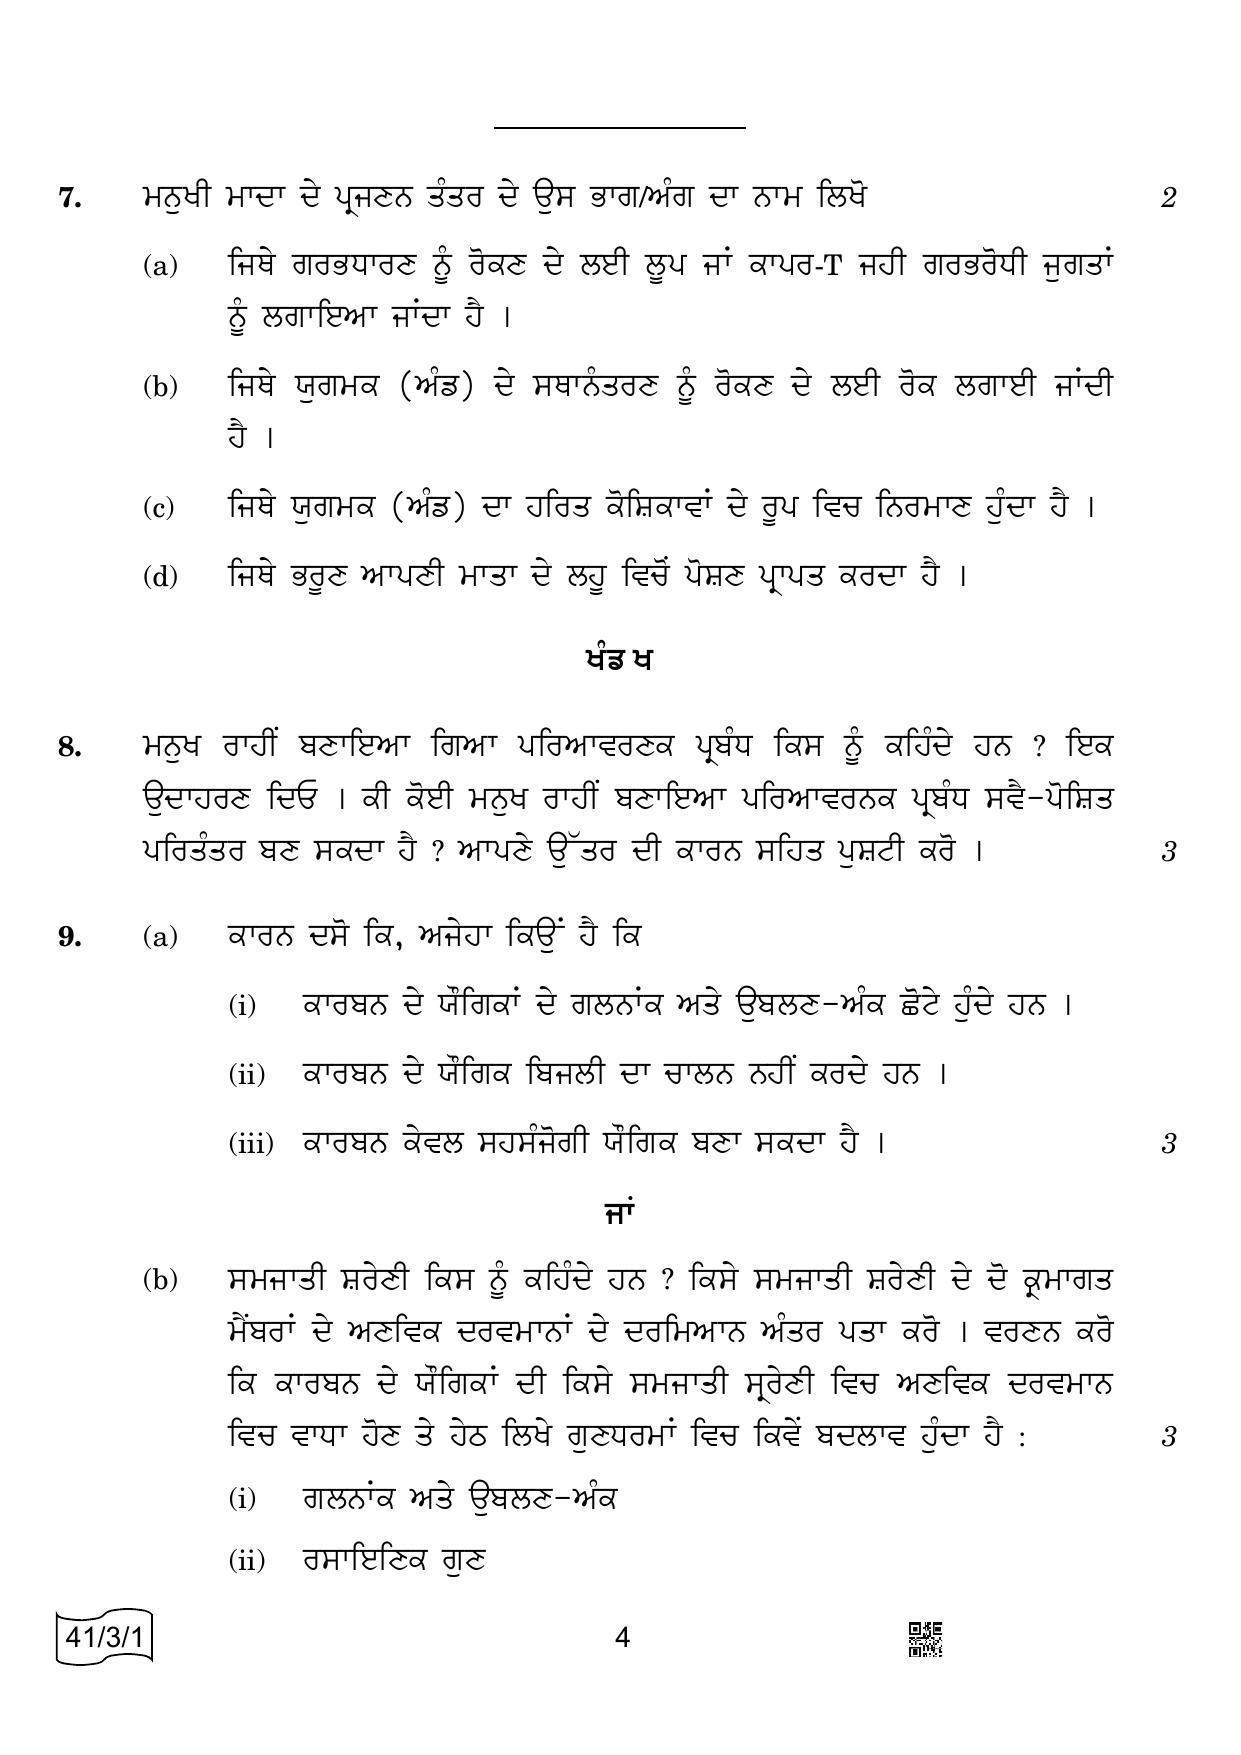 CBSE Class 10 41-3-1 Science Punjabi Version 2022 Question Paper - Page 4